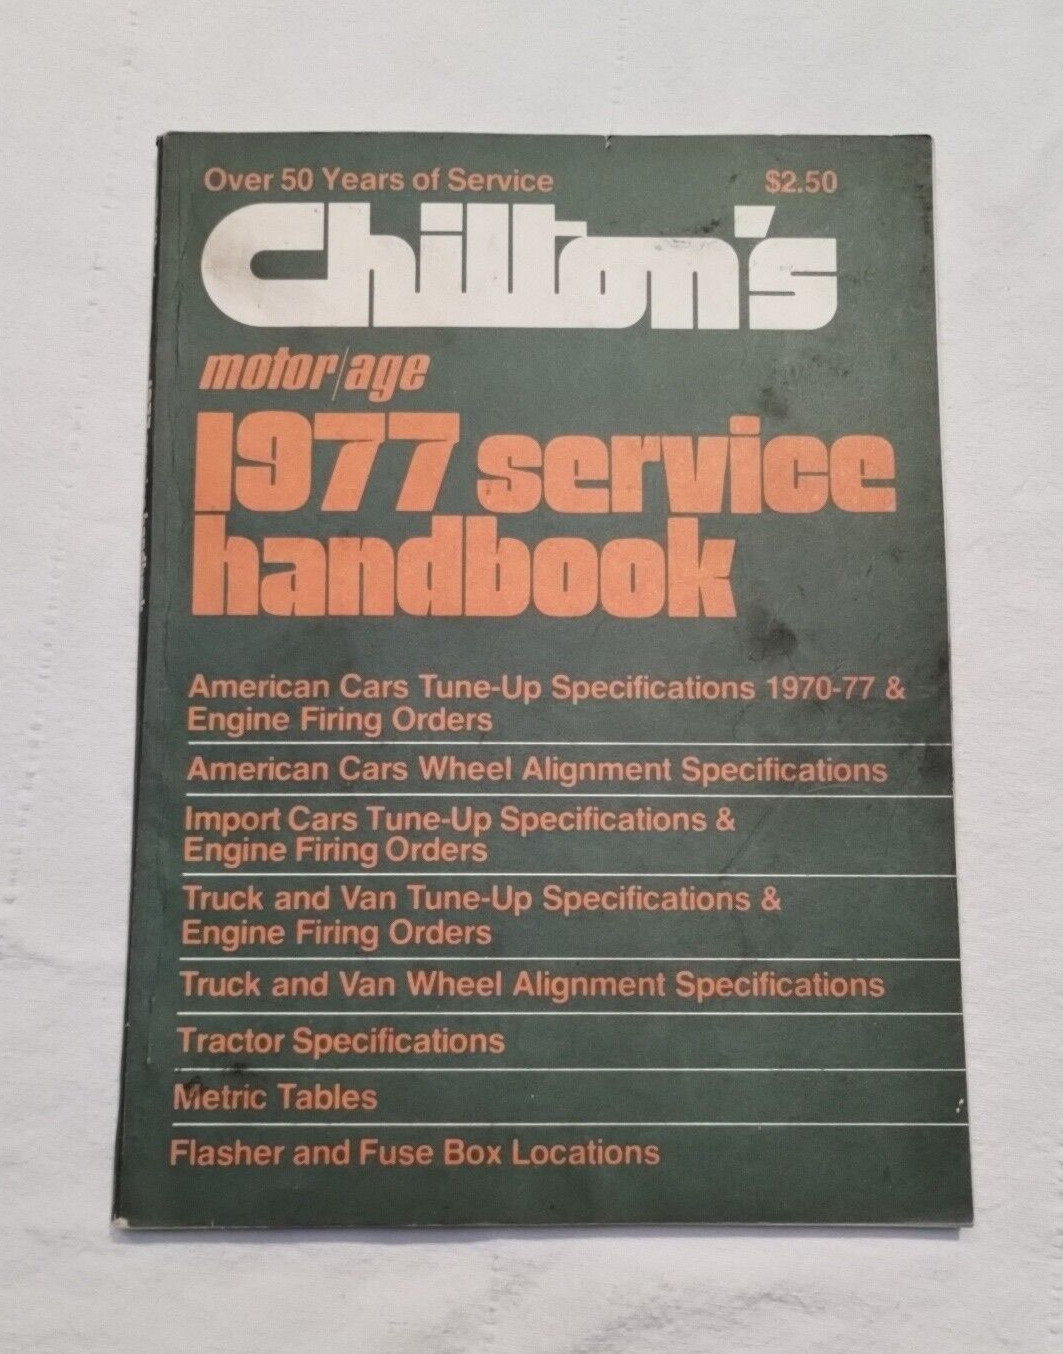 Chiltons Motor Age 1977 Service Handbook Vintage Rare Automobile Mechanics Guide